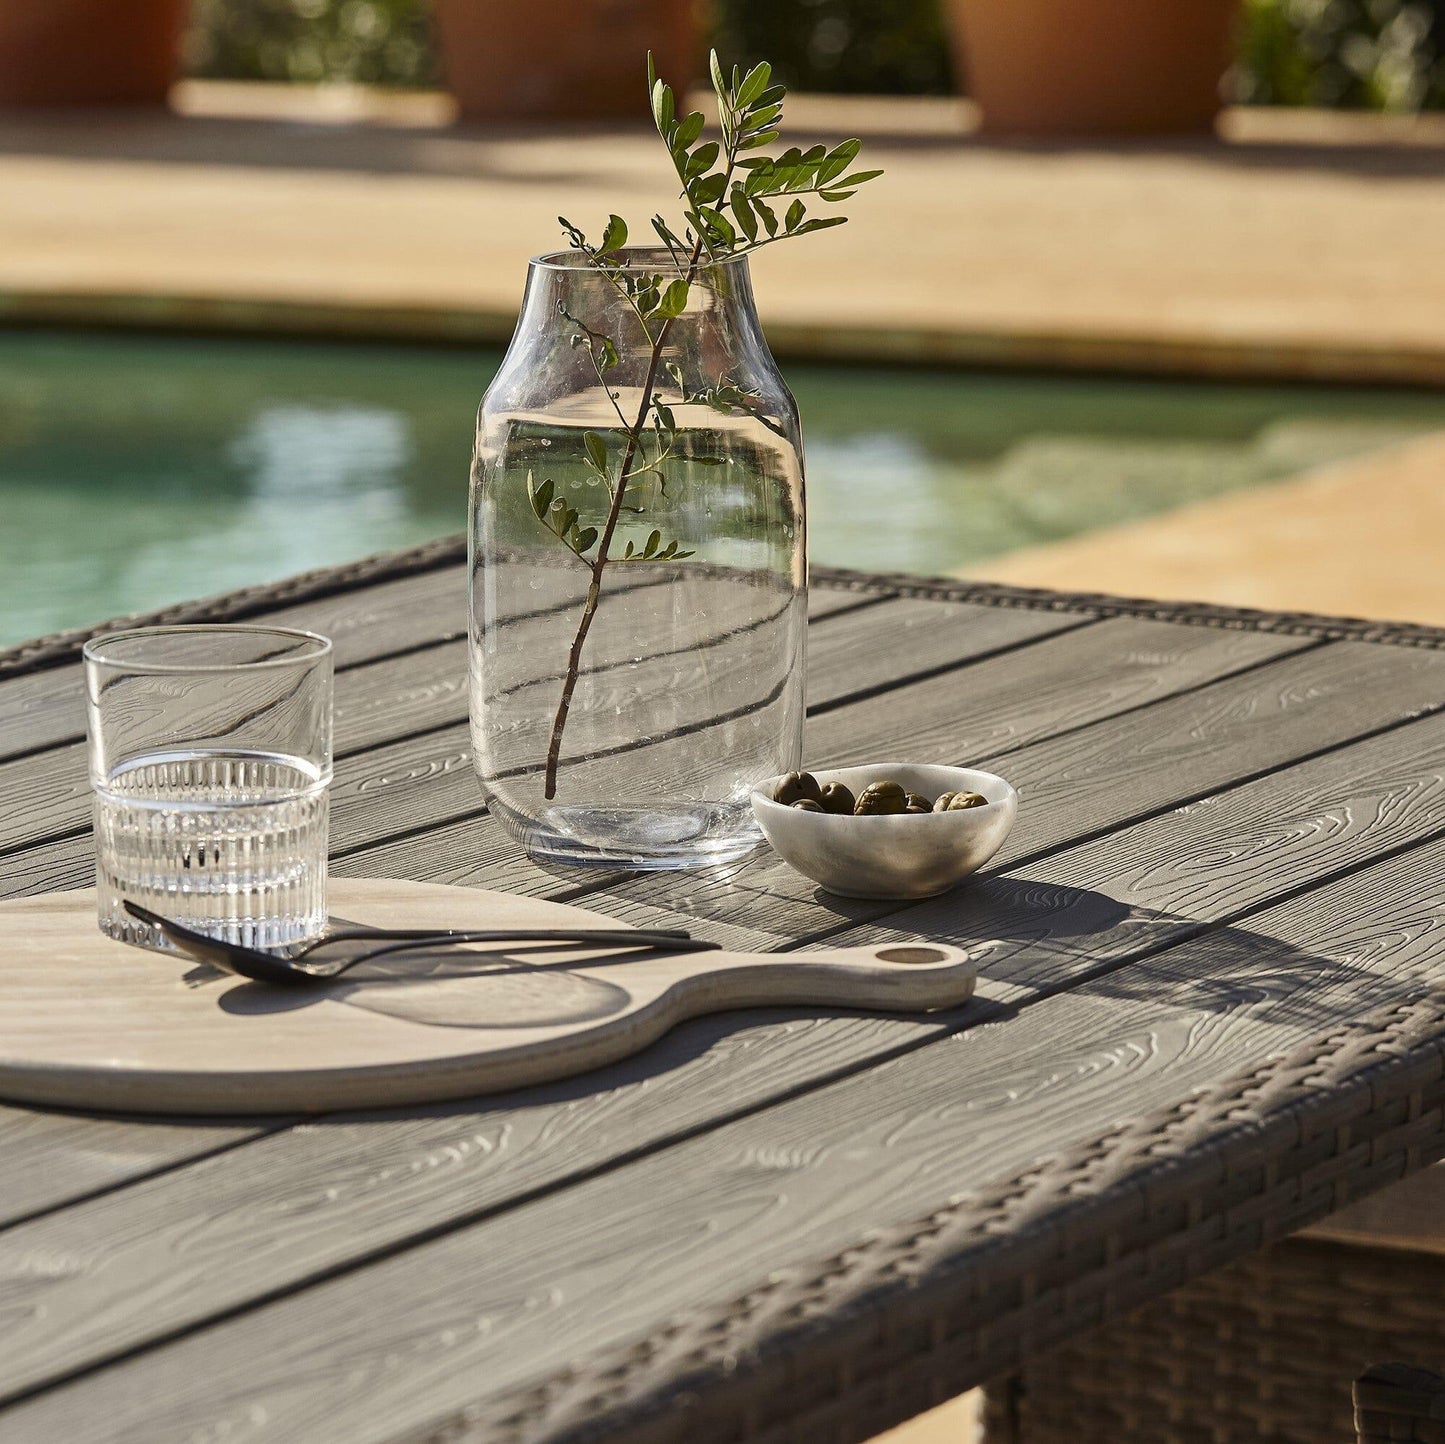 Marston 4 Seater Rattan Outdoor Dining Set with Grey Parasol - Rattan Garden Furniture - Grey - Polywood Top - Laura James